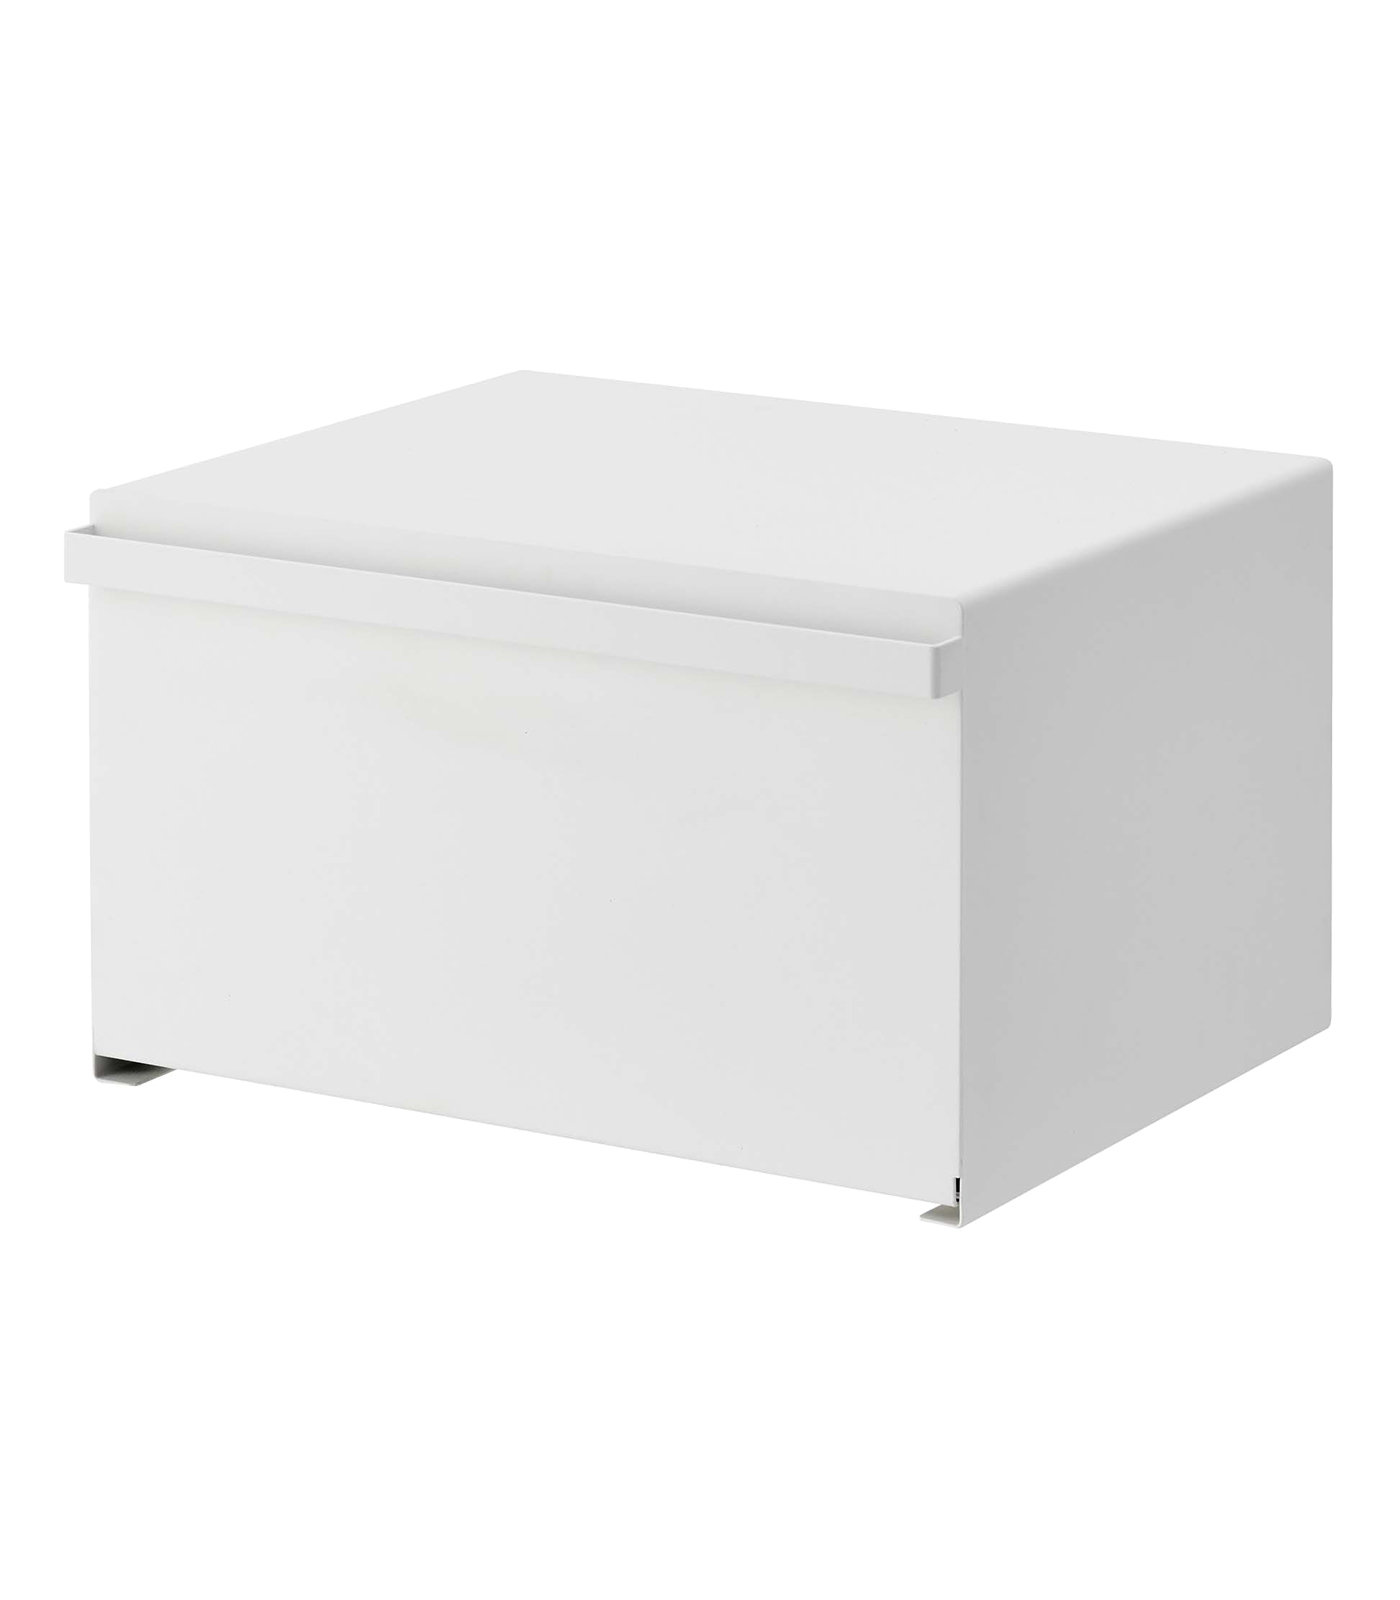 Yamazaki Home Storage Box - Mint